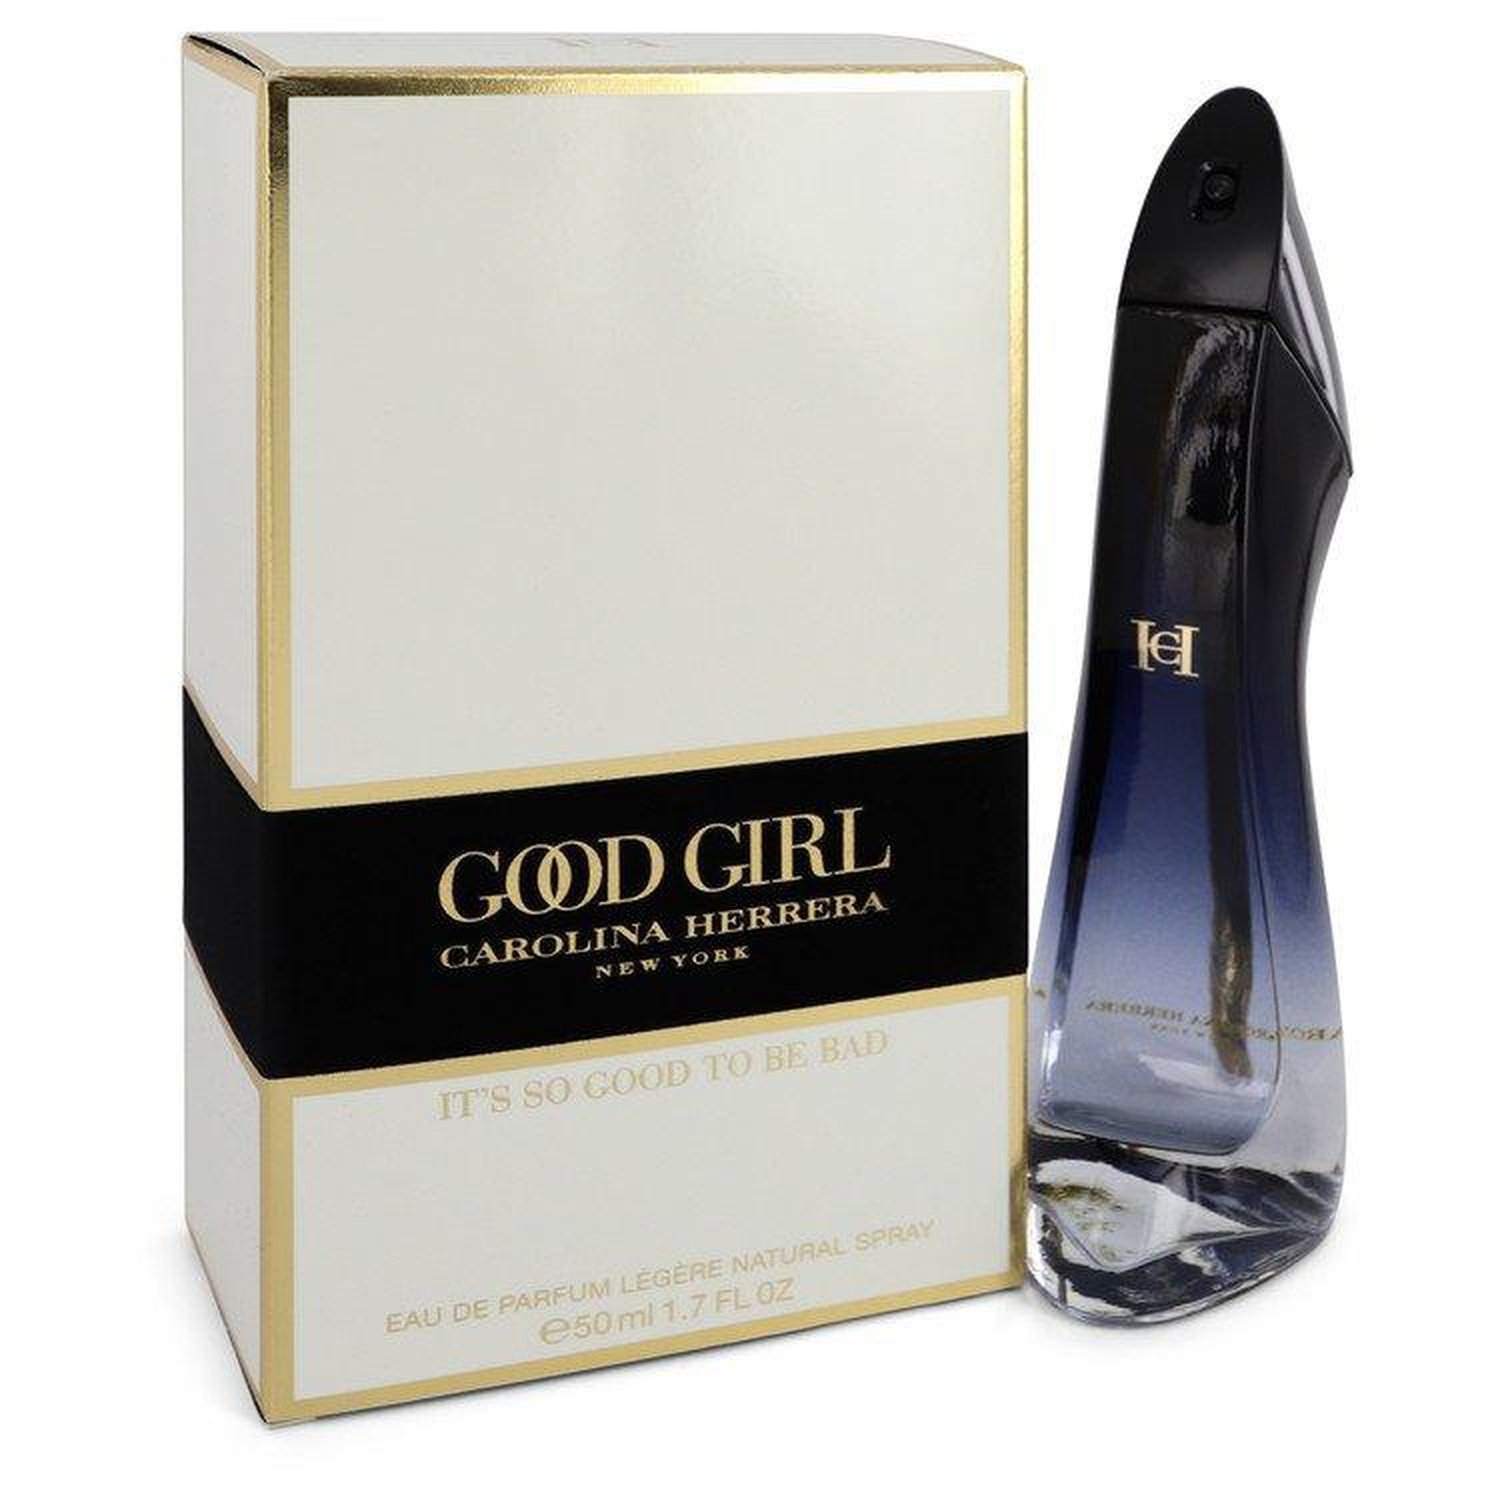 Good Girl Legere by Carolina Herrera Eau De Parfum Legere Spray (Women) 1.7 oz